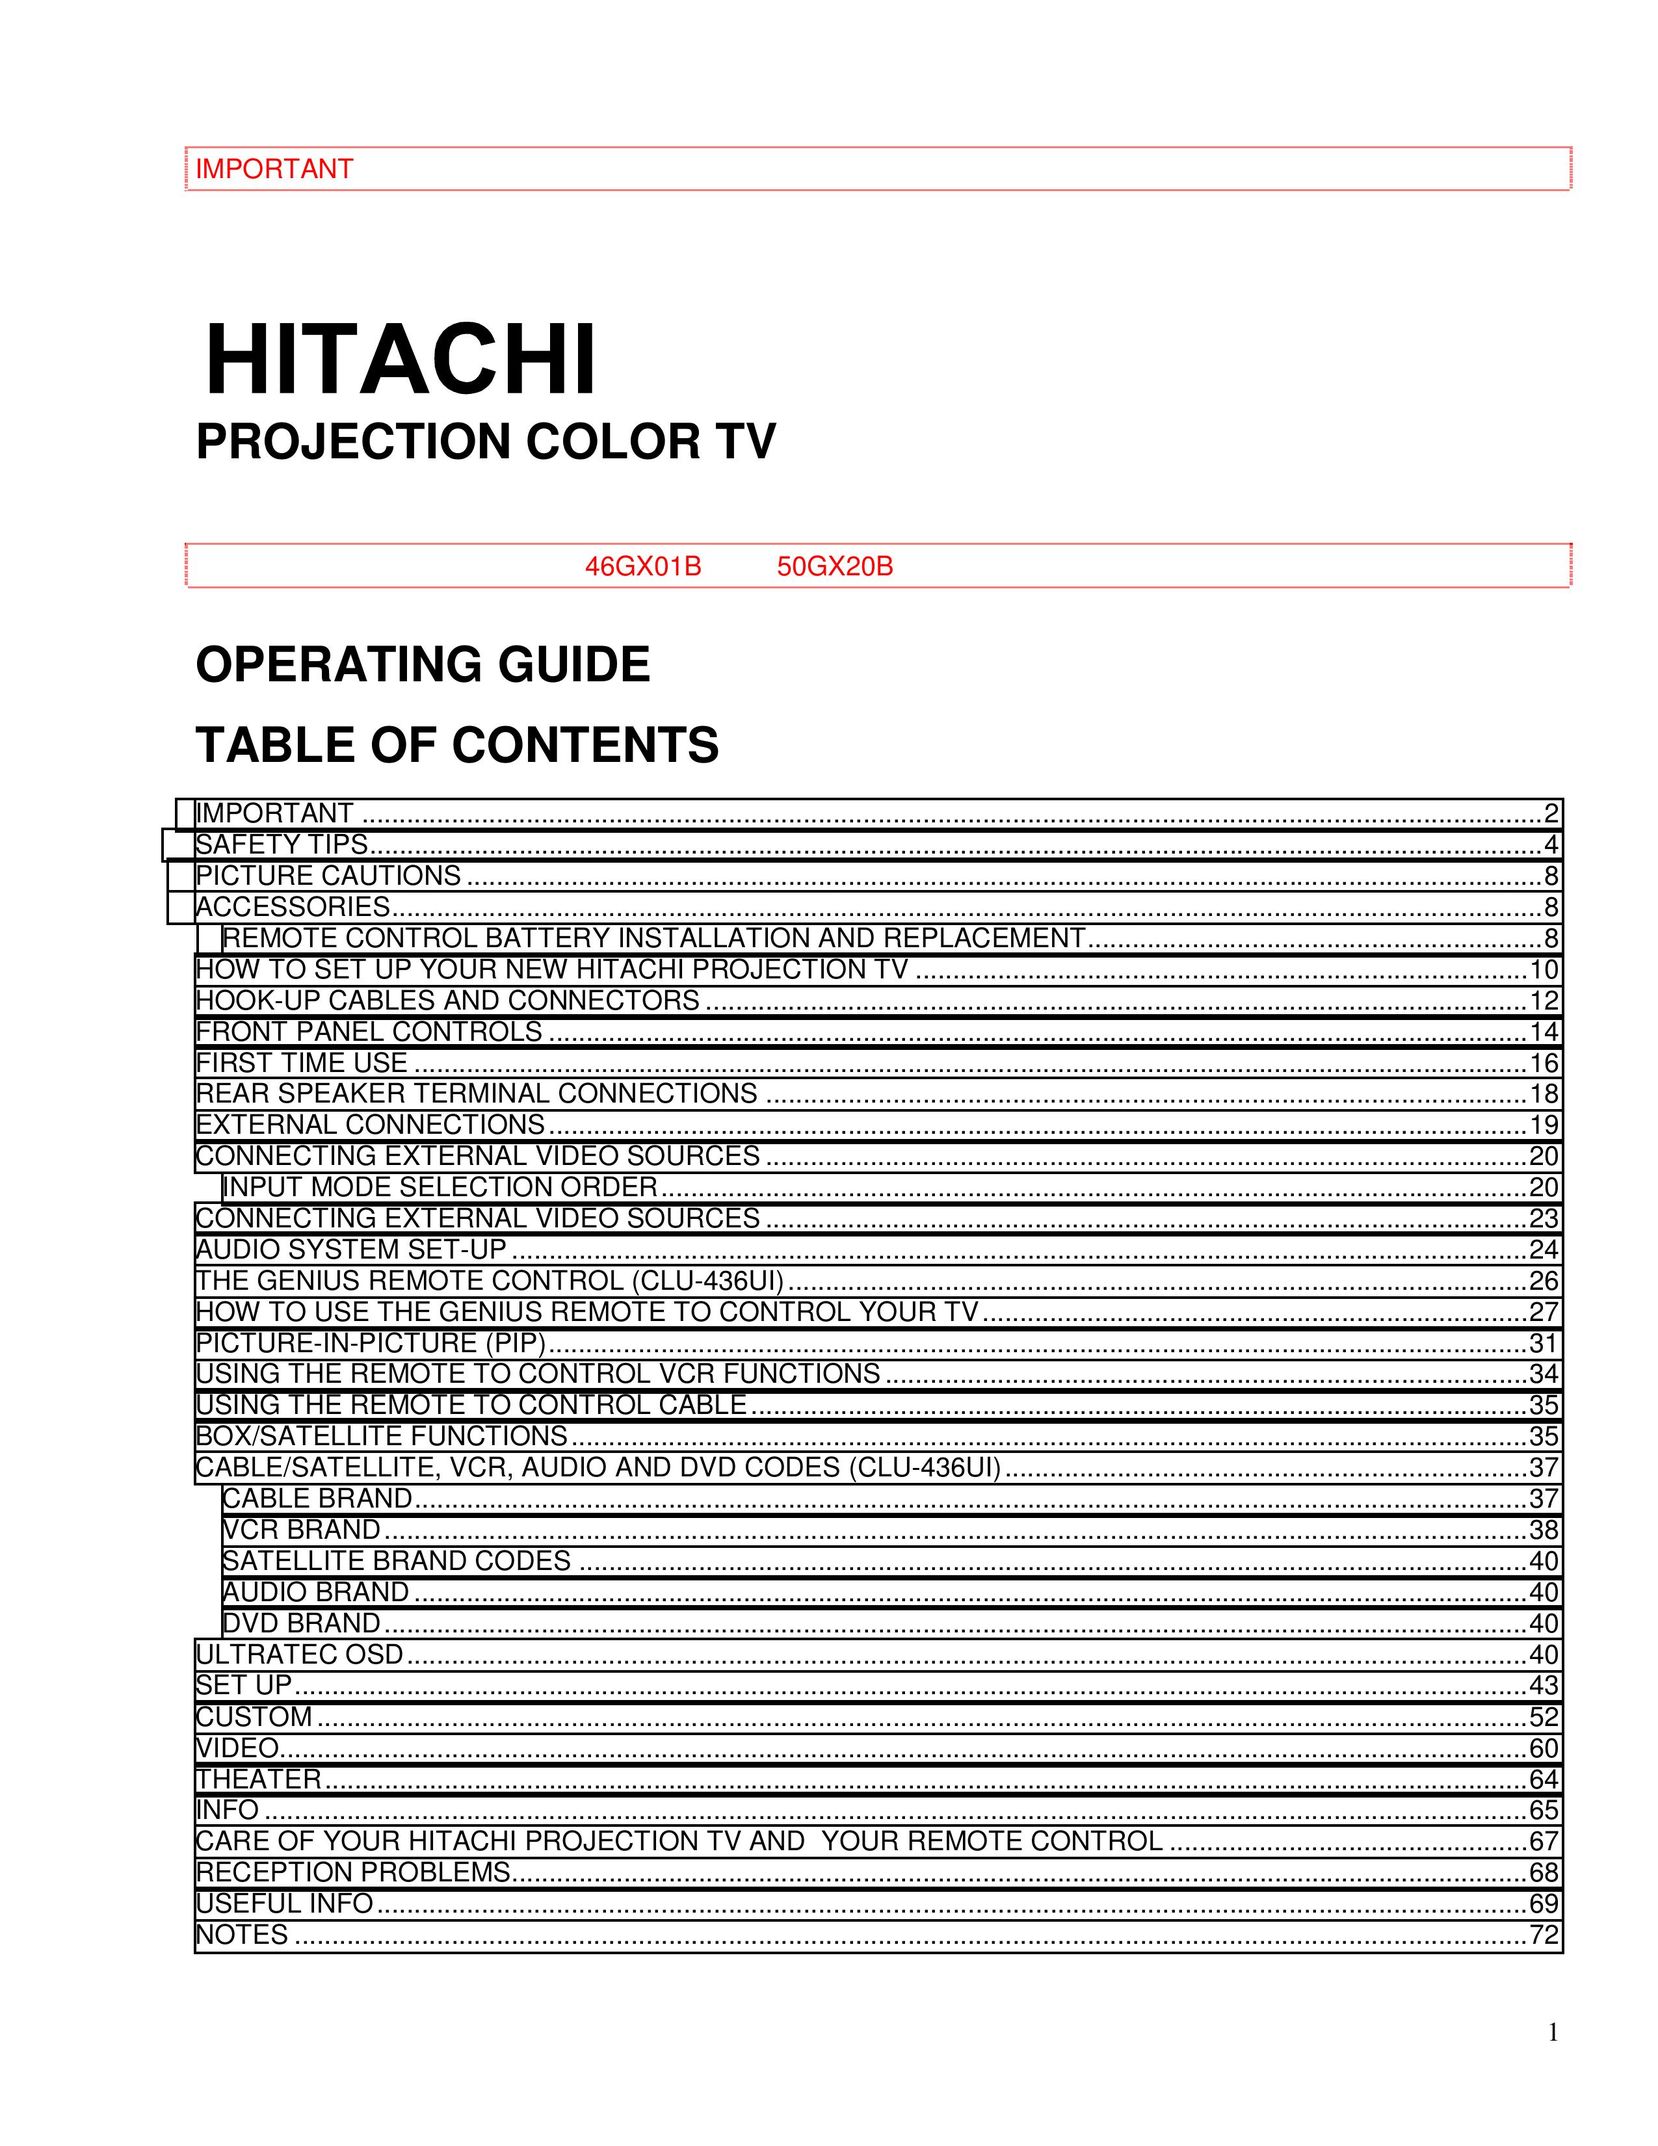 Hitachi 50GX20B Projection Television User Manual